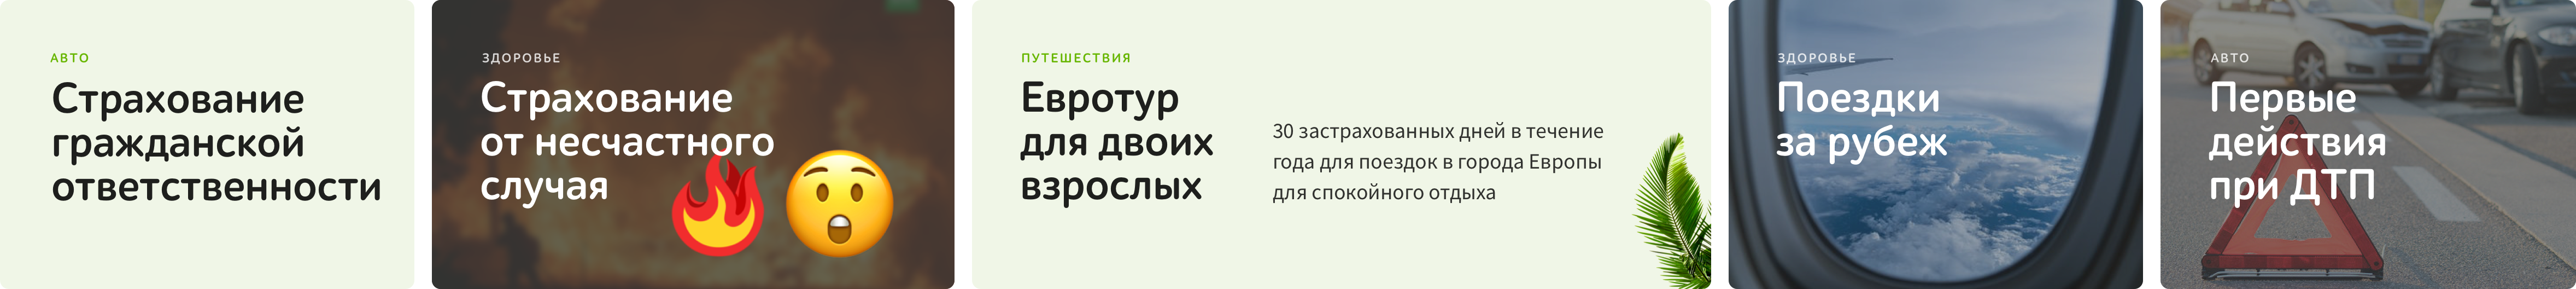 strahovka ru slide image